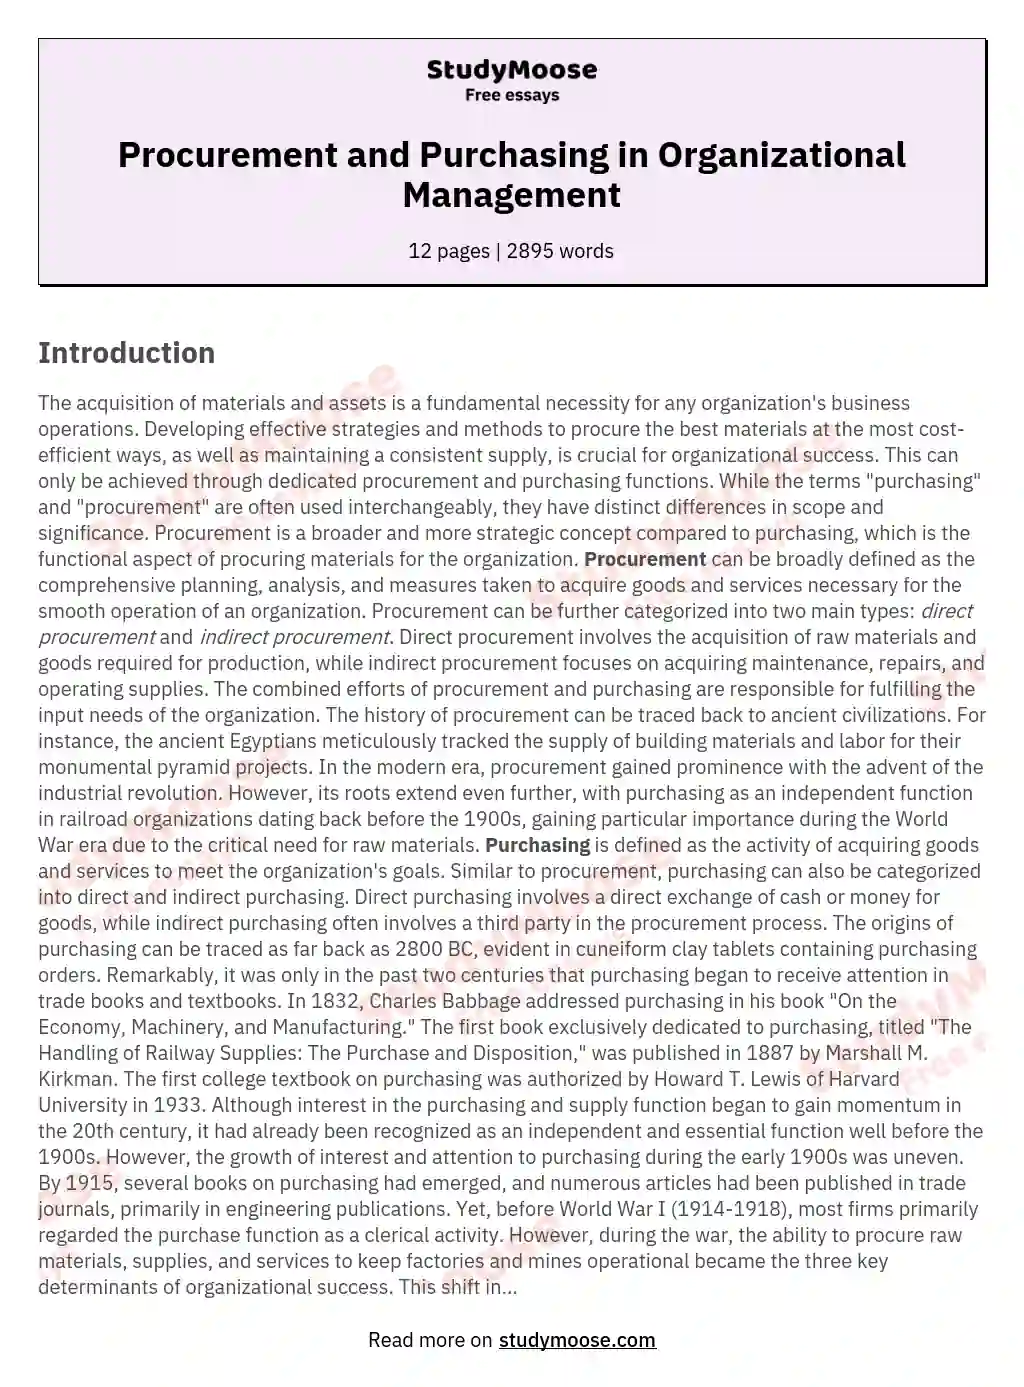 Procurement and Purchasing in Organizational Management essay